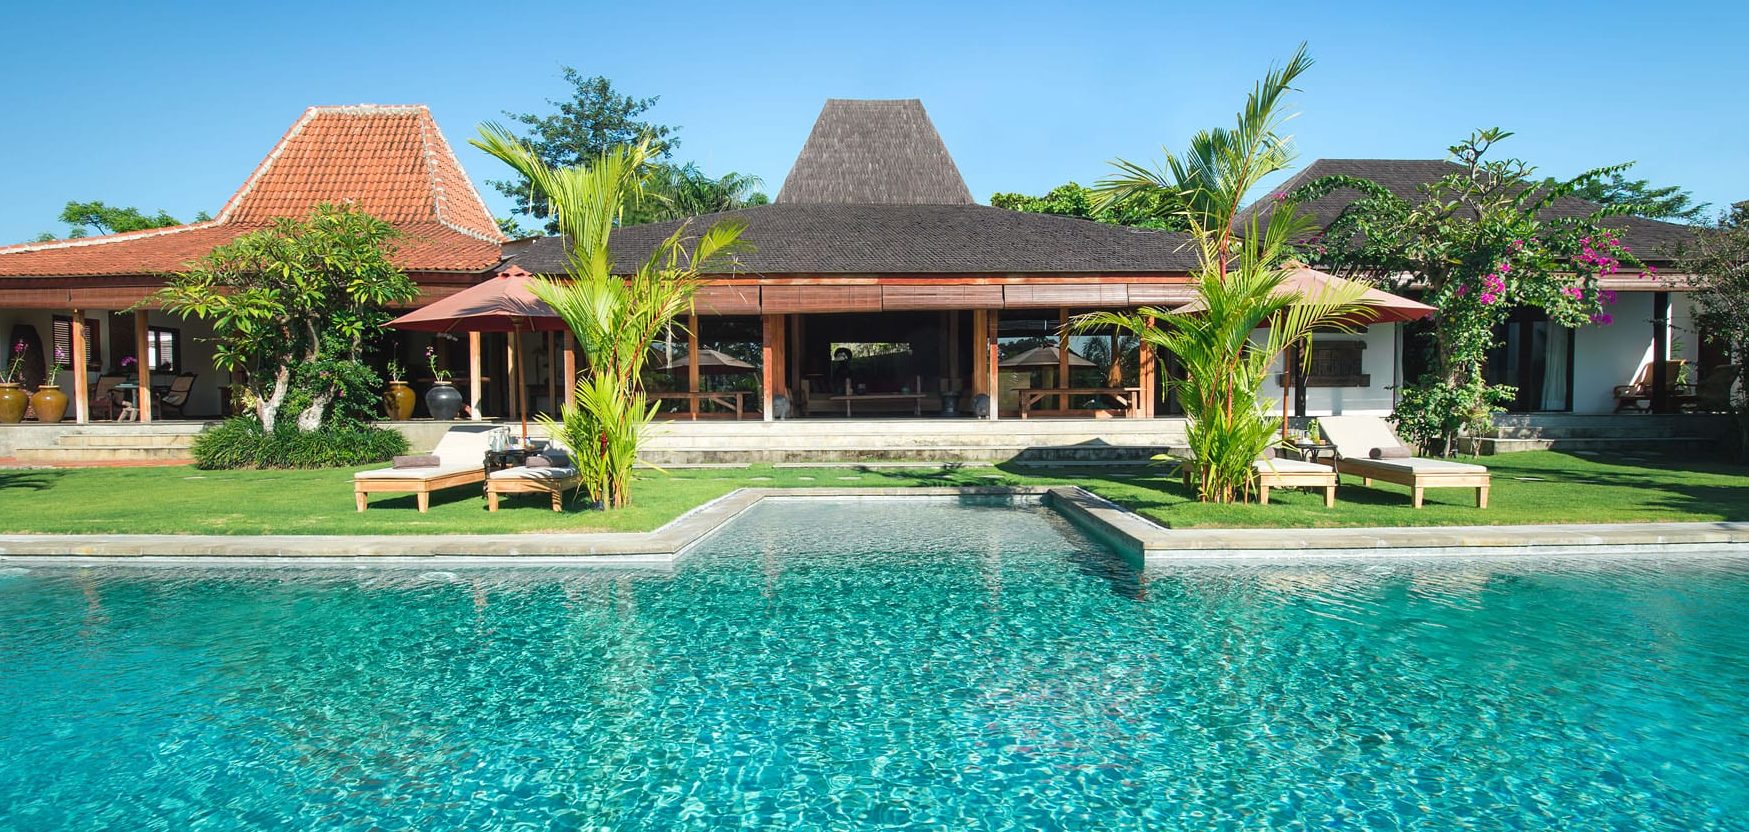 Villa Theo Bali - overview pool area